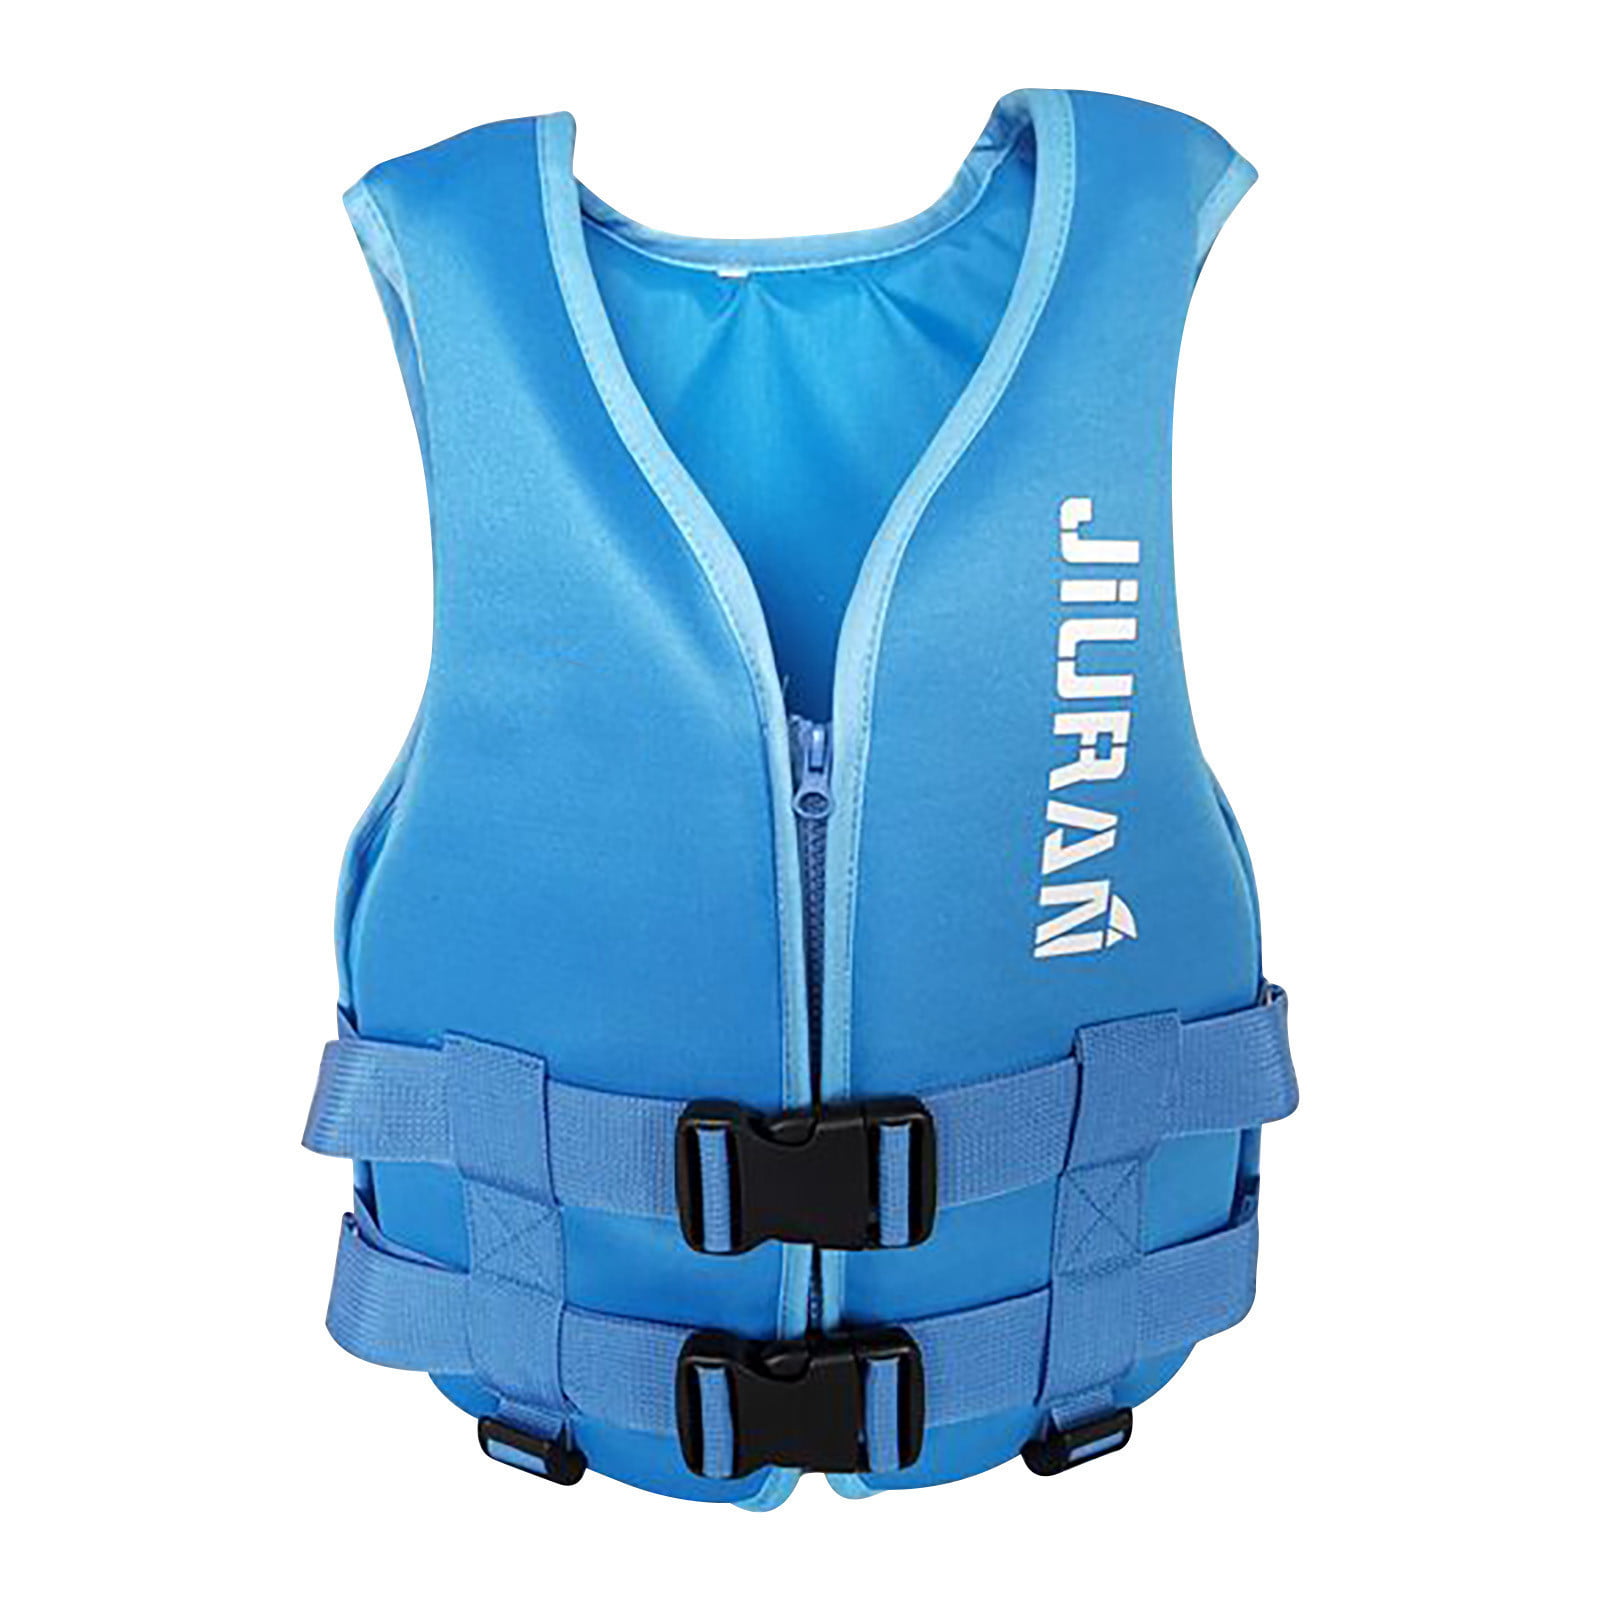 US Sailing Kayak Life Jacket Drifting Swim Lifesaving Vest Buoyancy Aid For Kids 